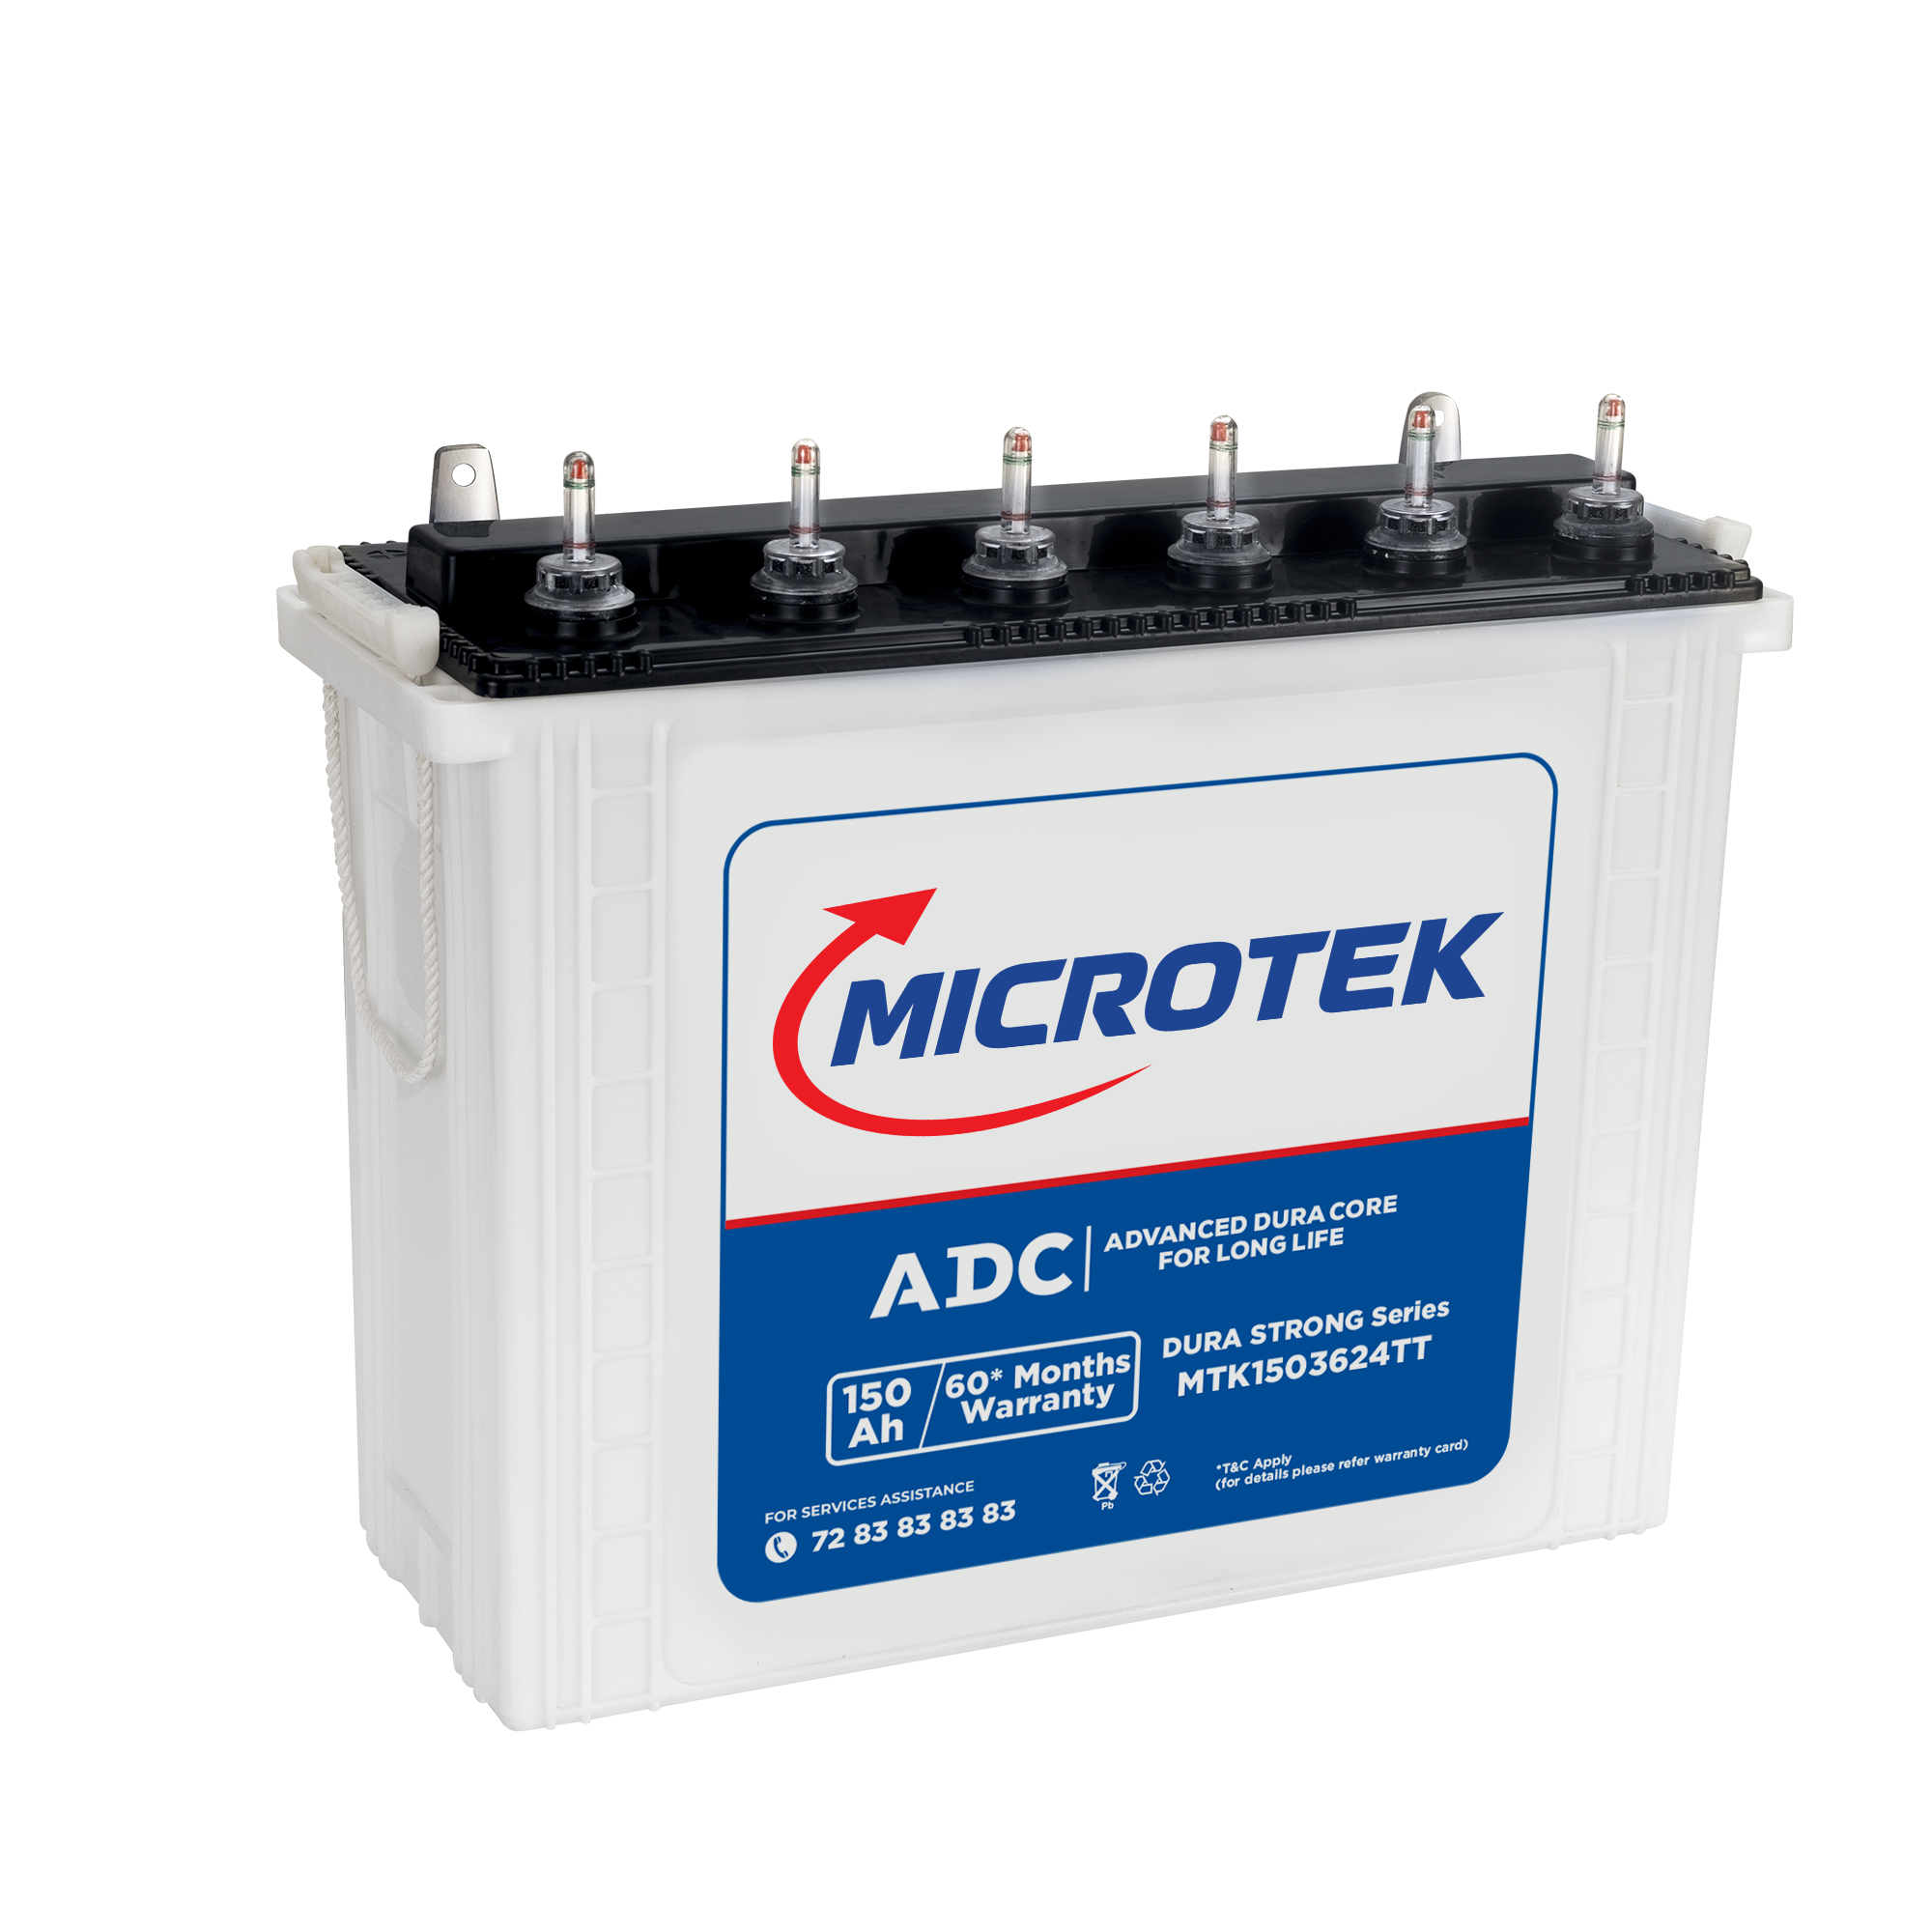 Microtek Dura Strong MTK1503624TT 150Ah/12V Inverter Battery With Advanced Dura Core Technology